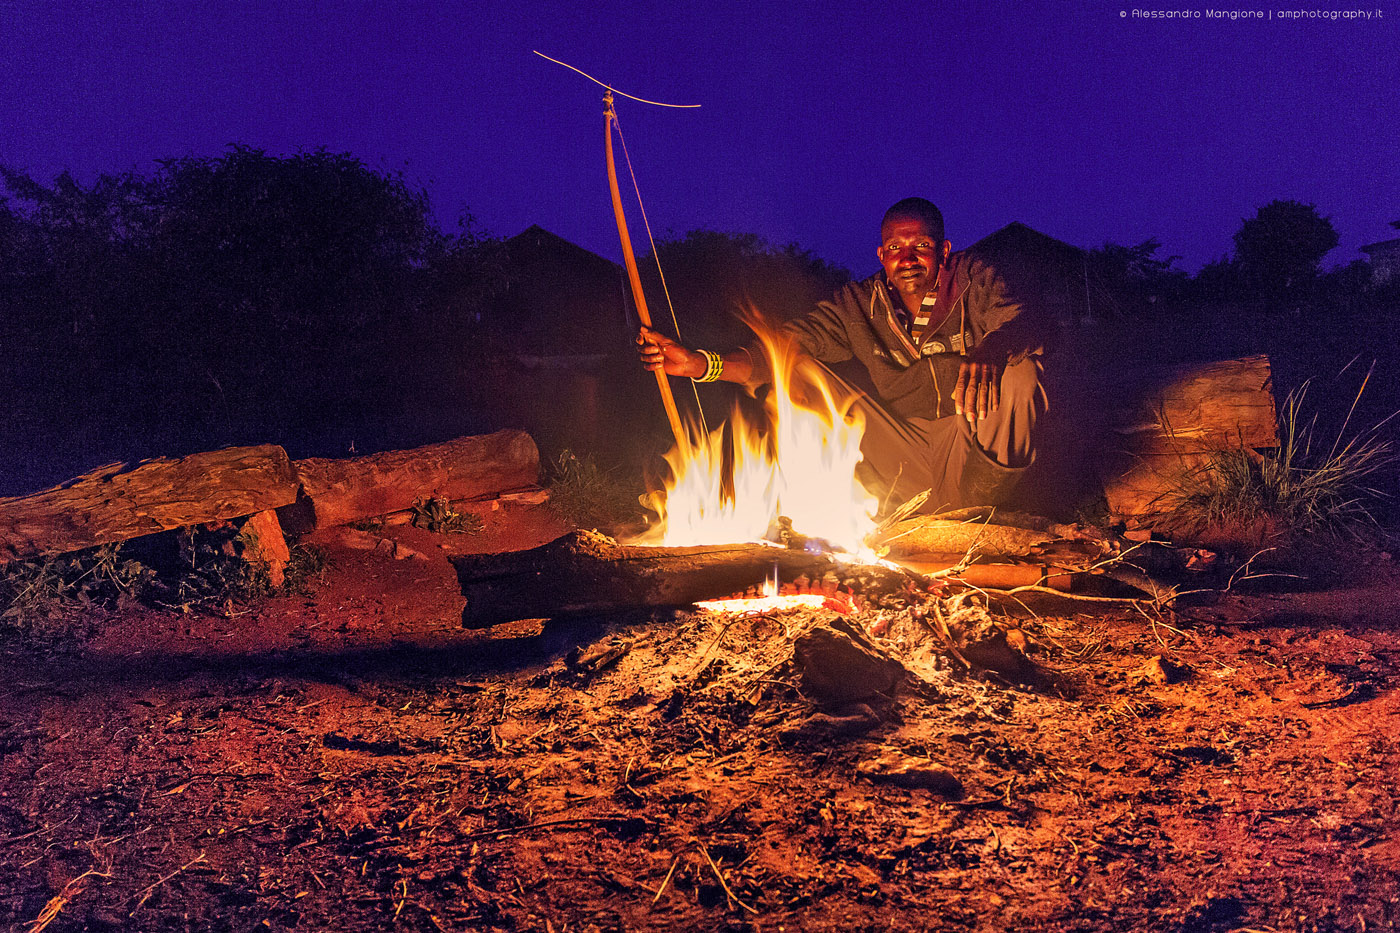 Maasai sit around camp fire